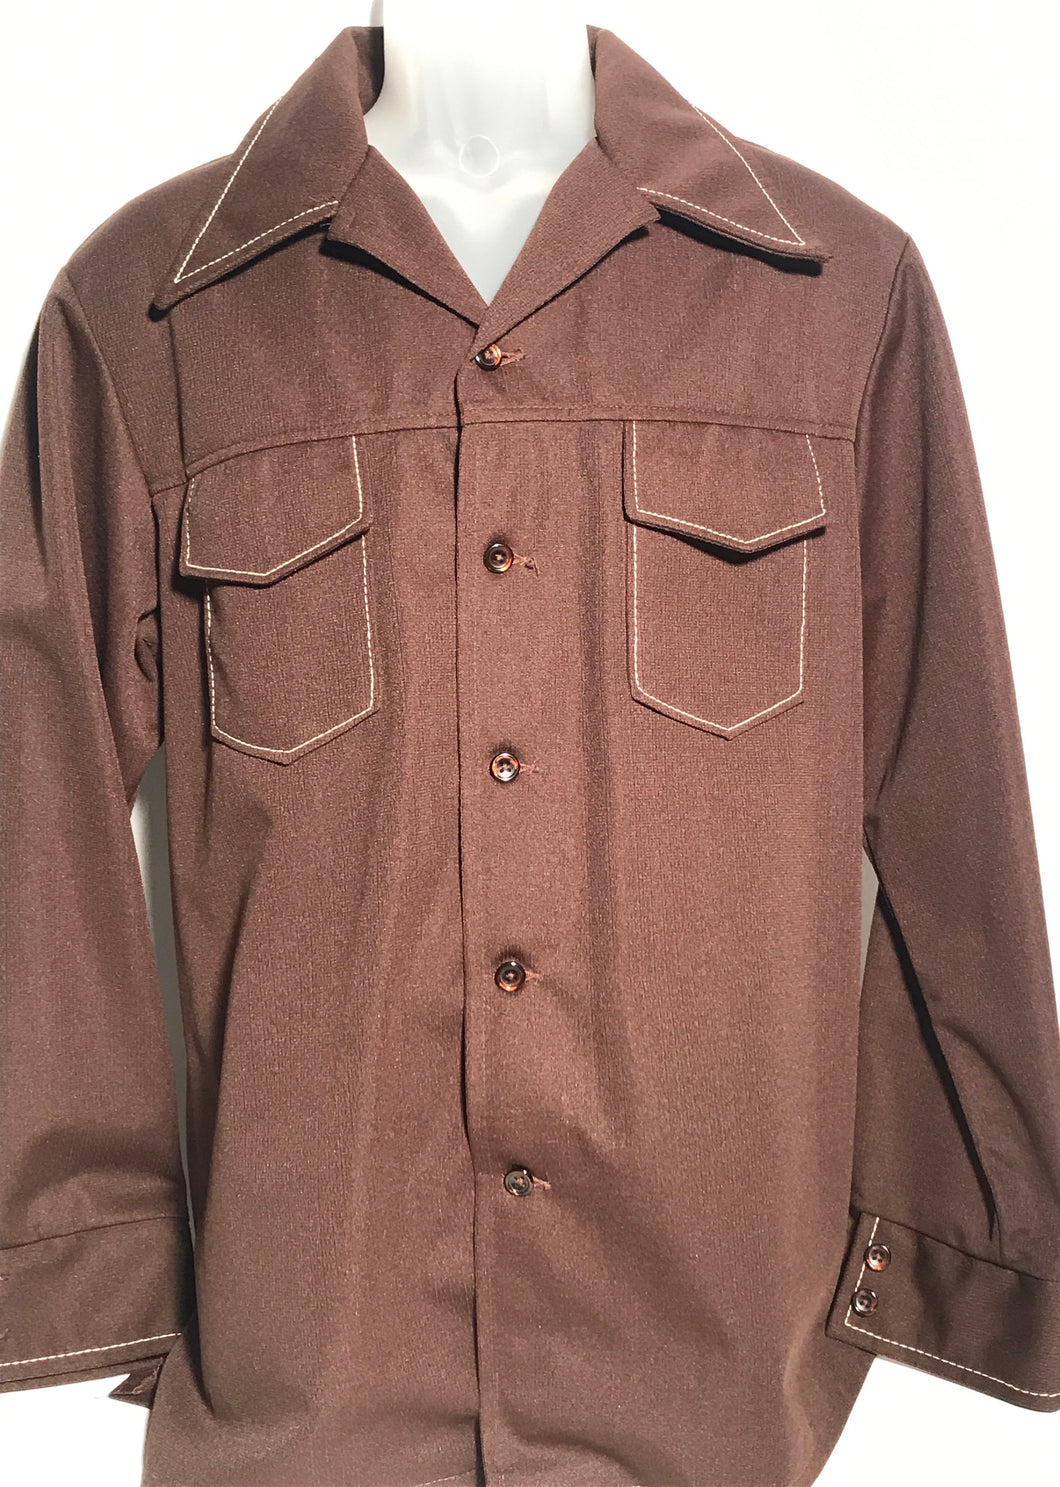 1970s Farah Brown Leisure Jacket Size Extra Large RENTAL XL